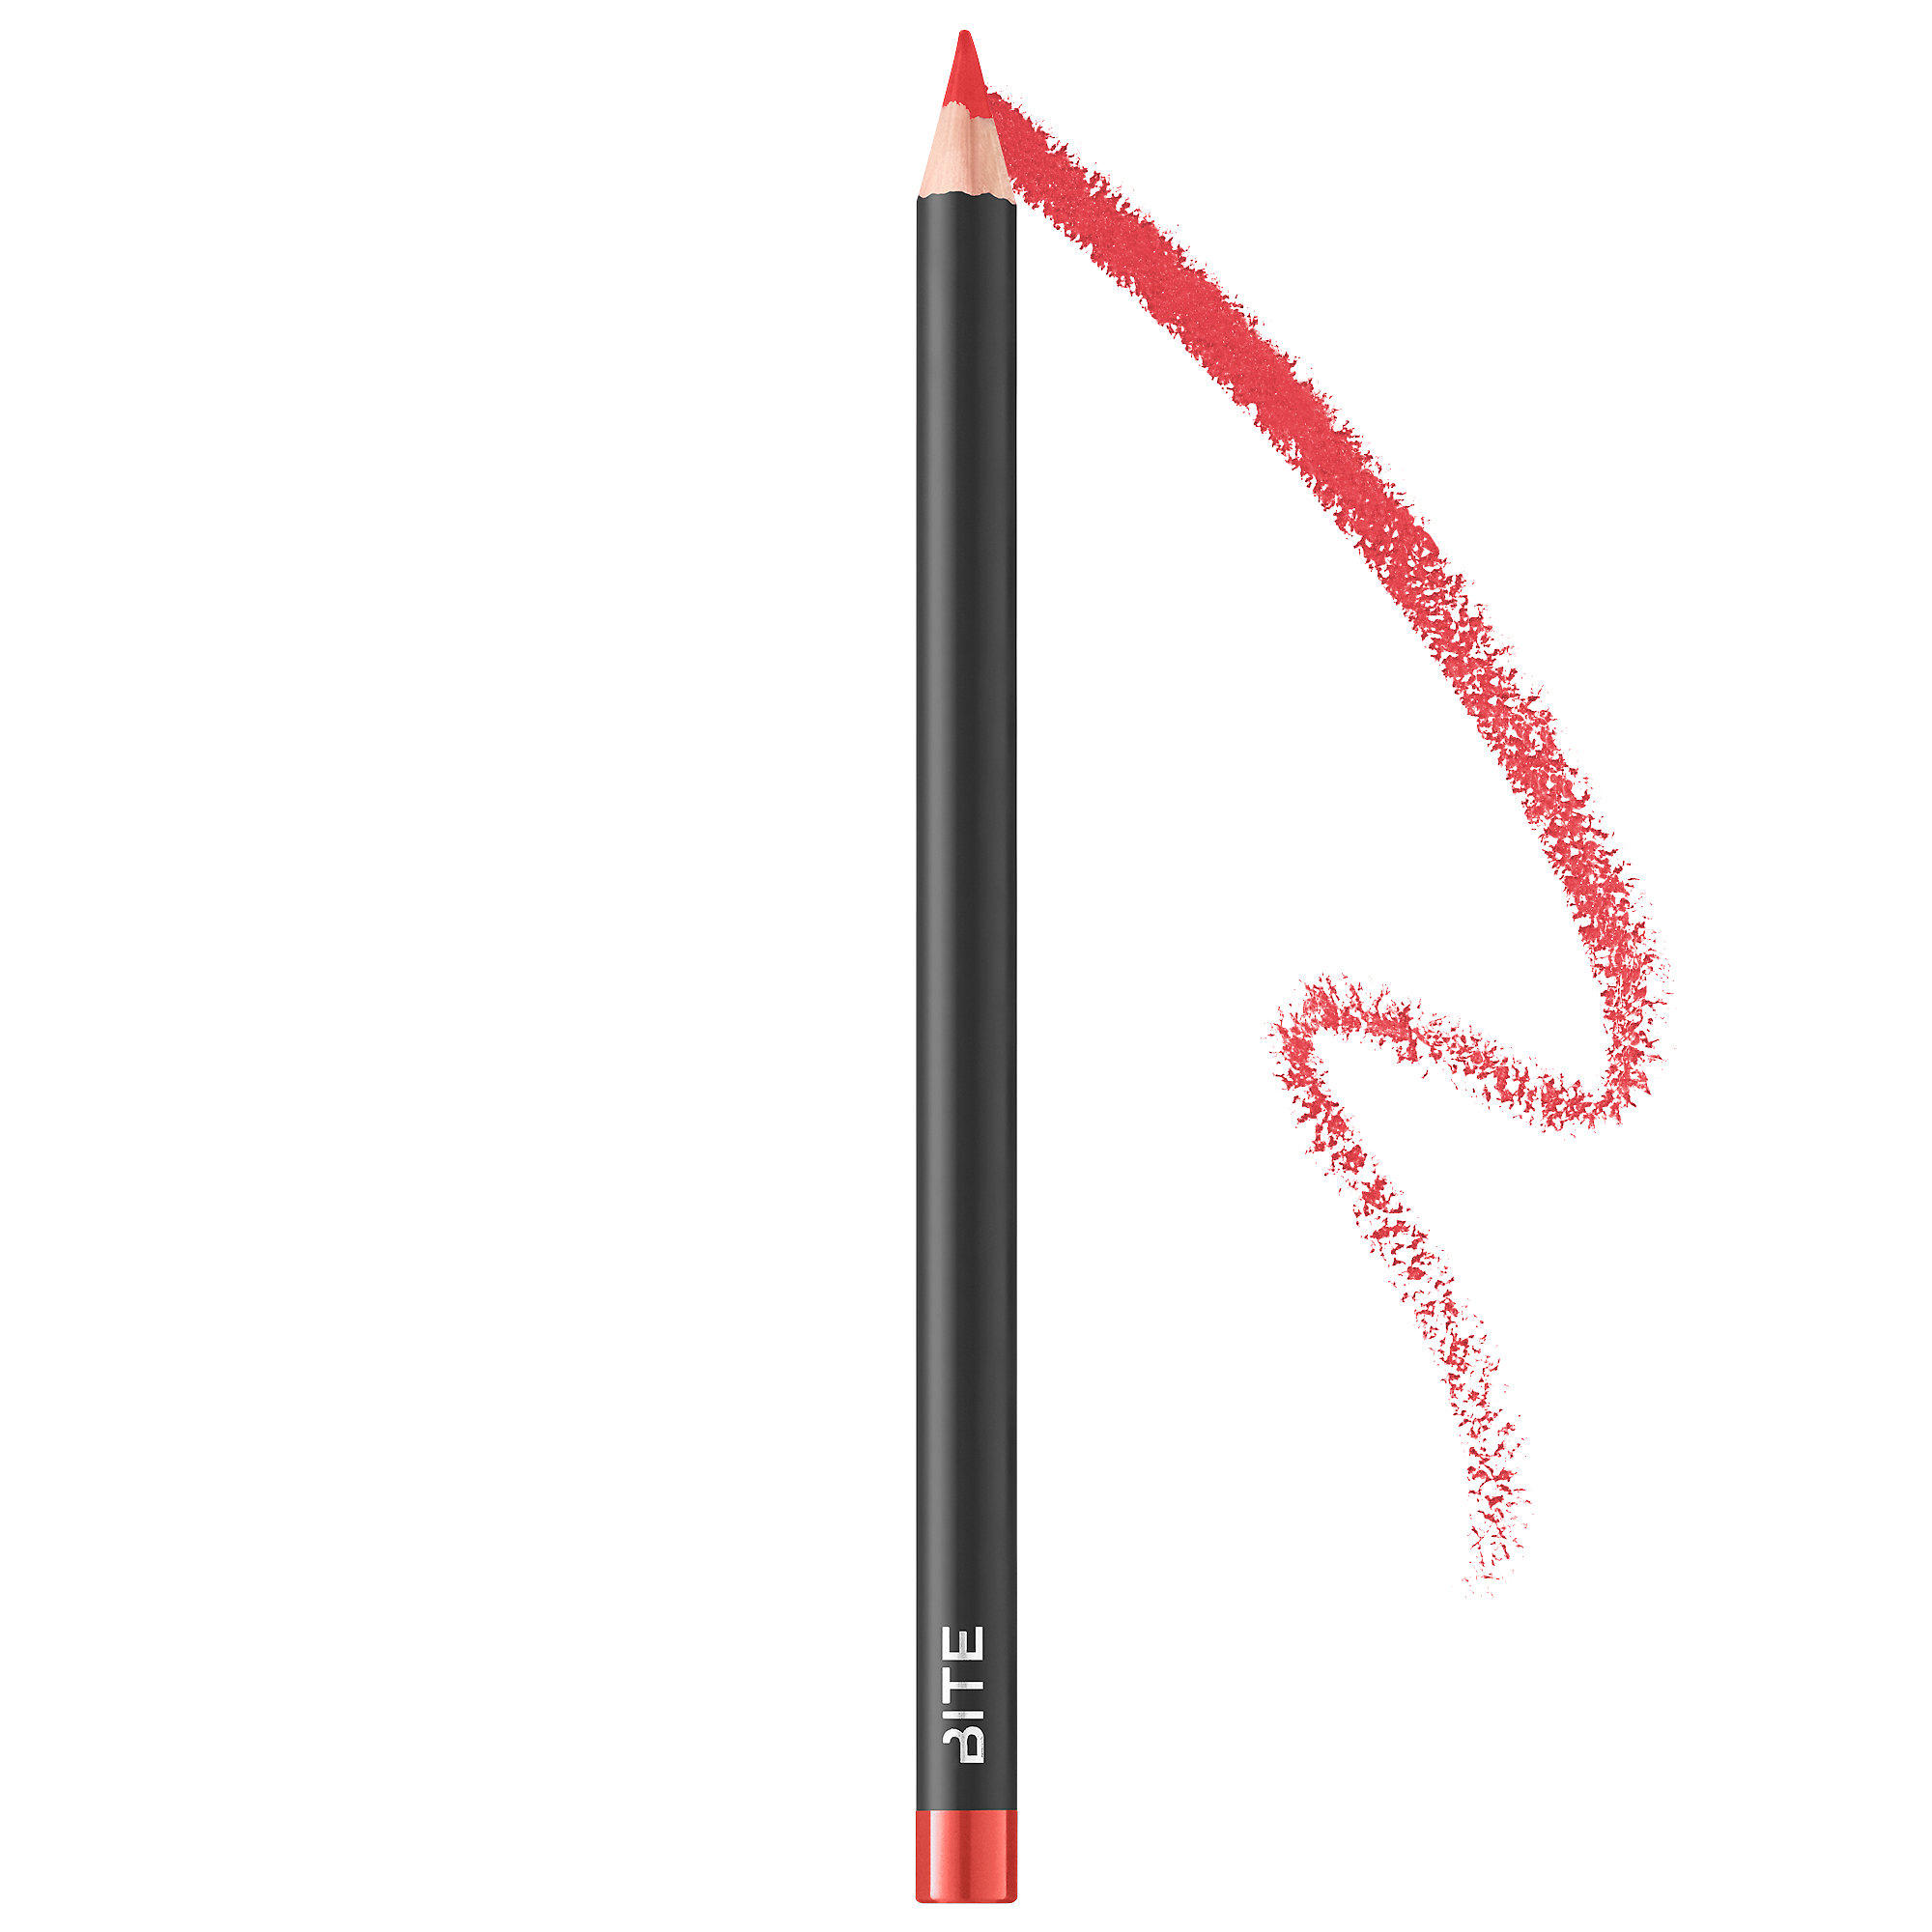 Bite Beauty The Lip Pencil Intense Red-Orange 074